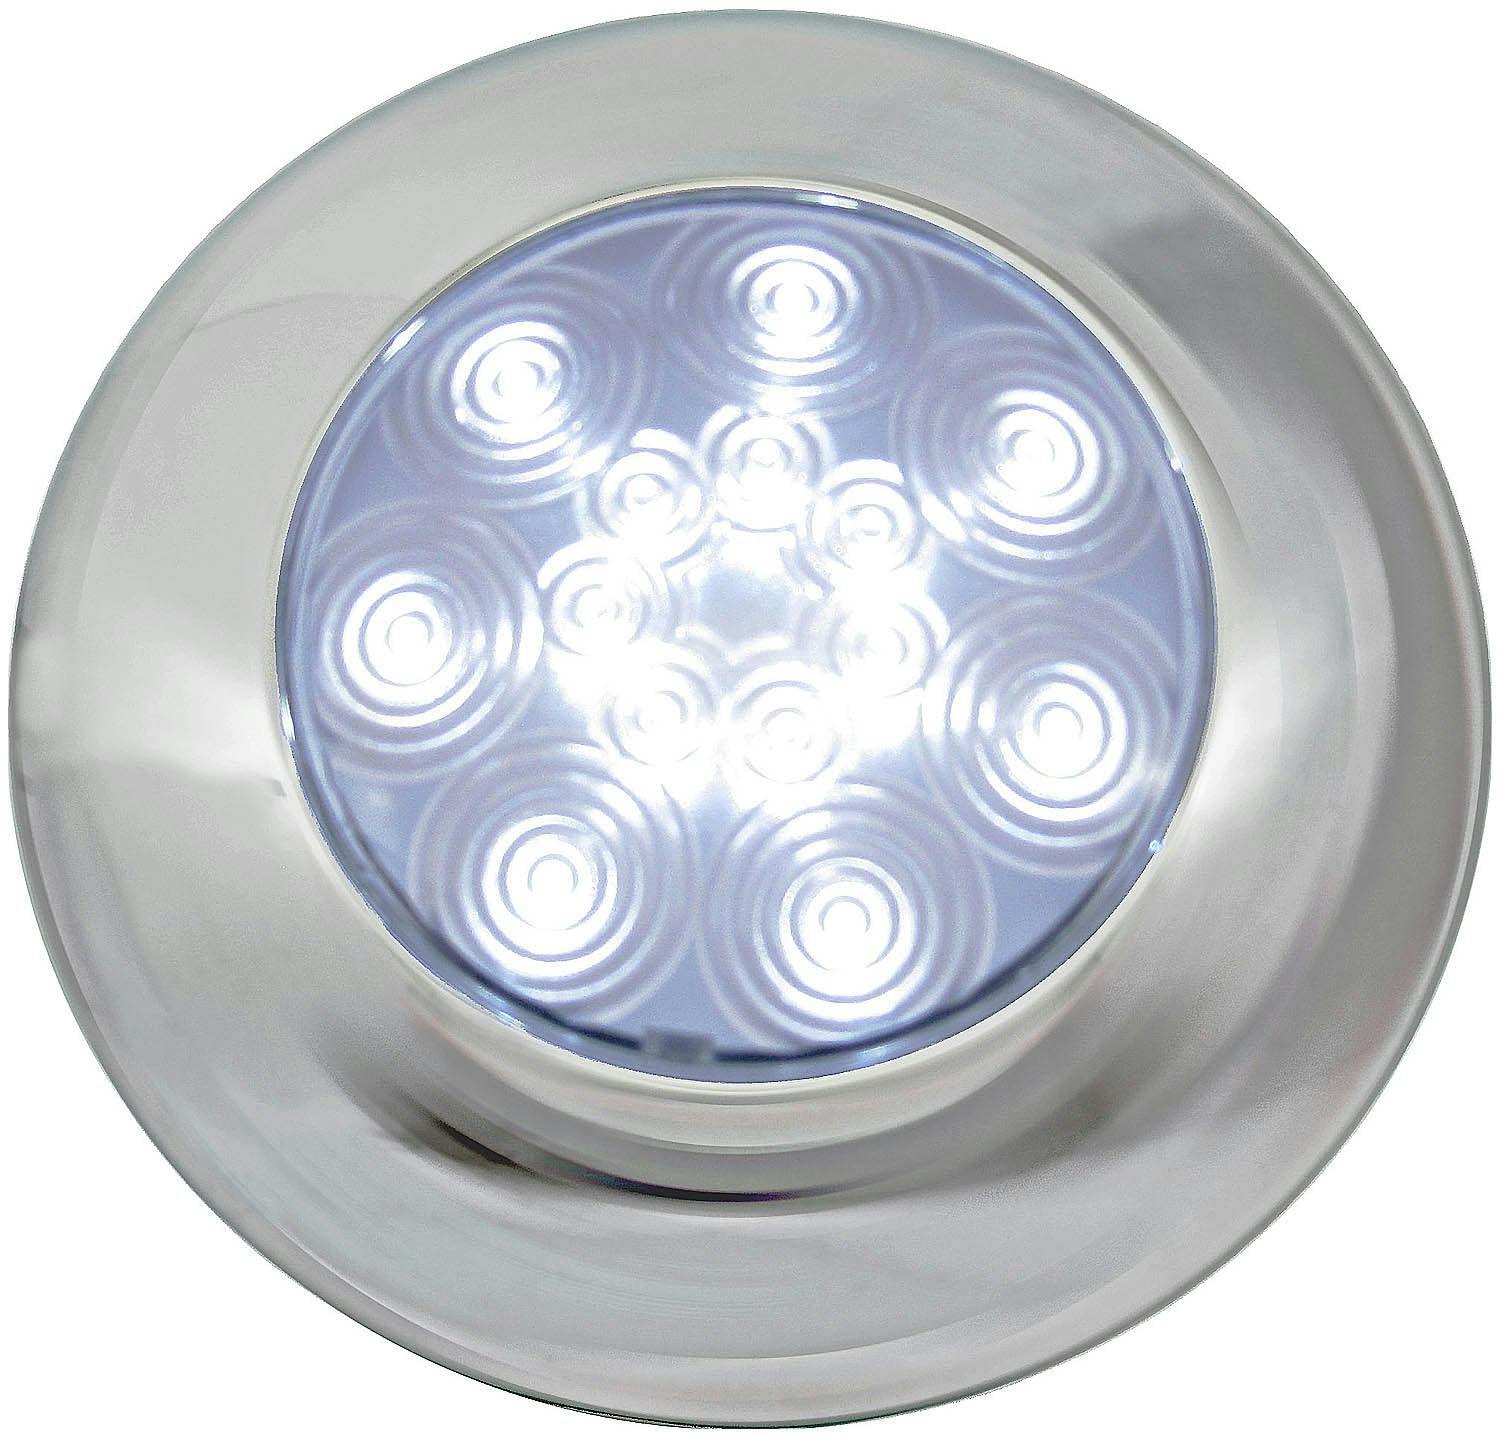 LED Dome/ Interior Light, Round, Chrome, 2.95", white (Pack of 6) - 381X